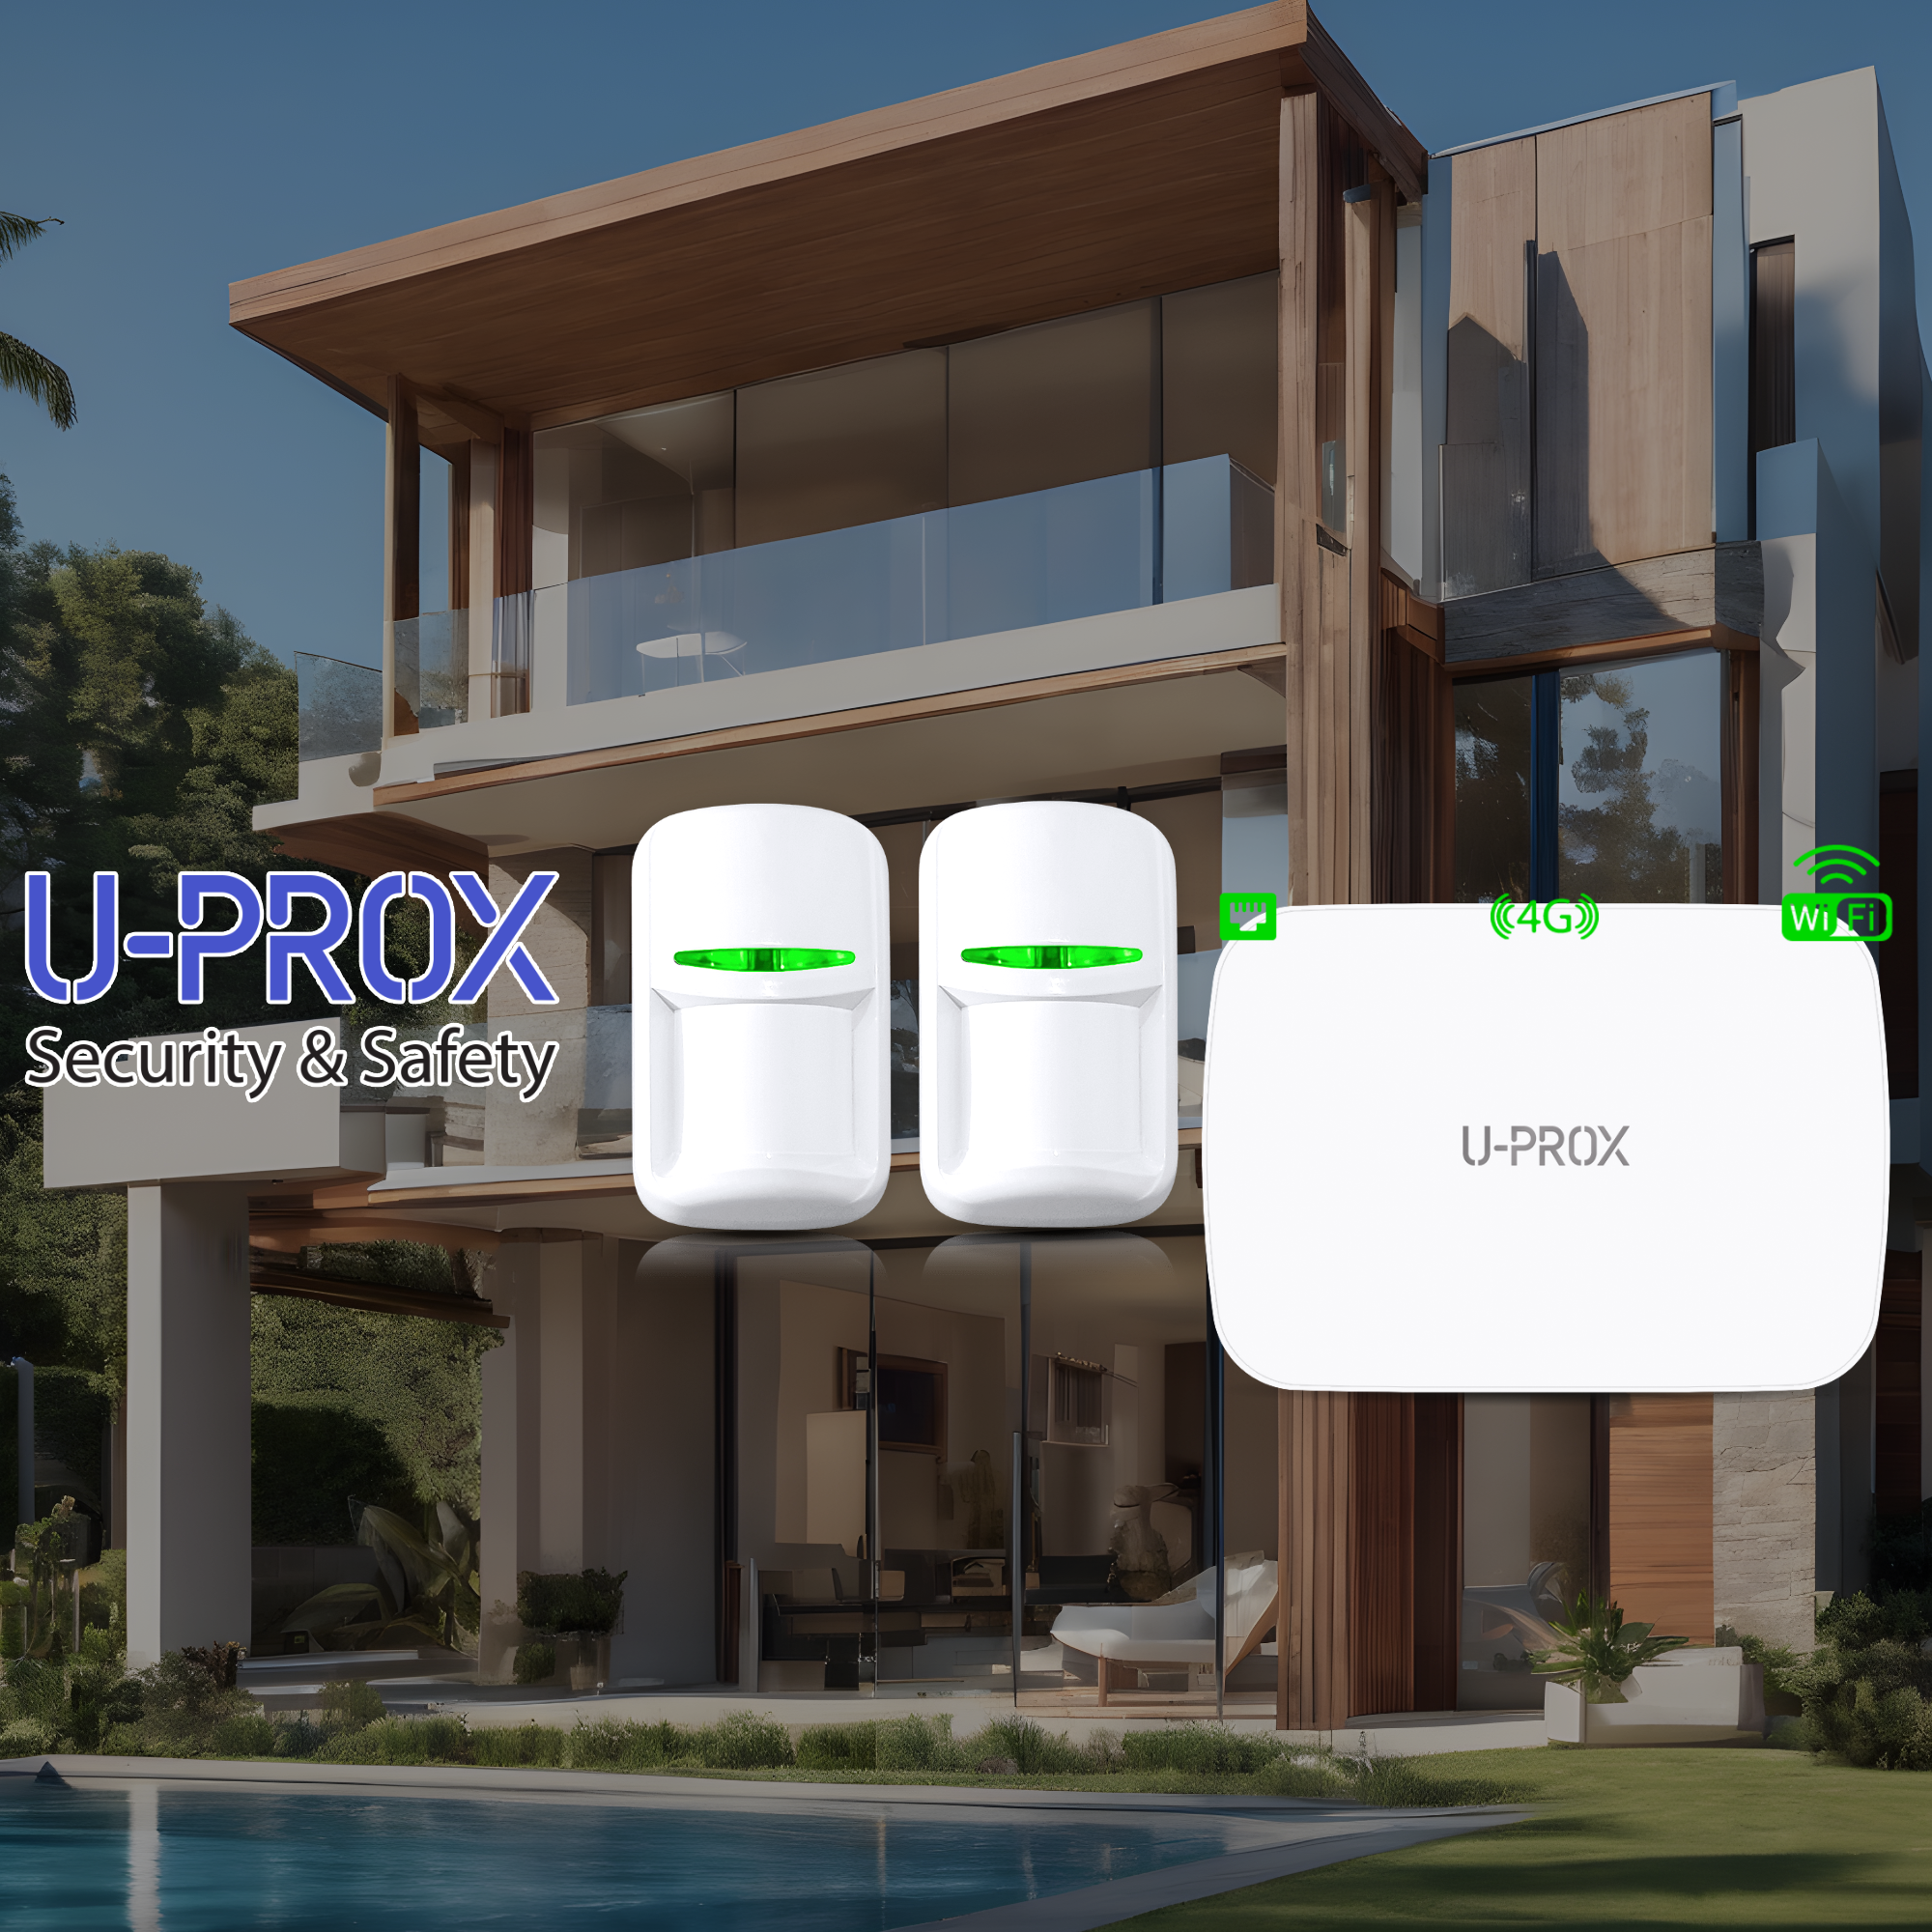 Introducing the U-Prox Wireless Alarm Solution